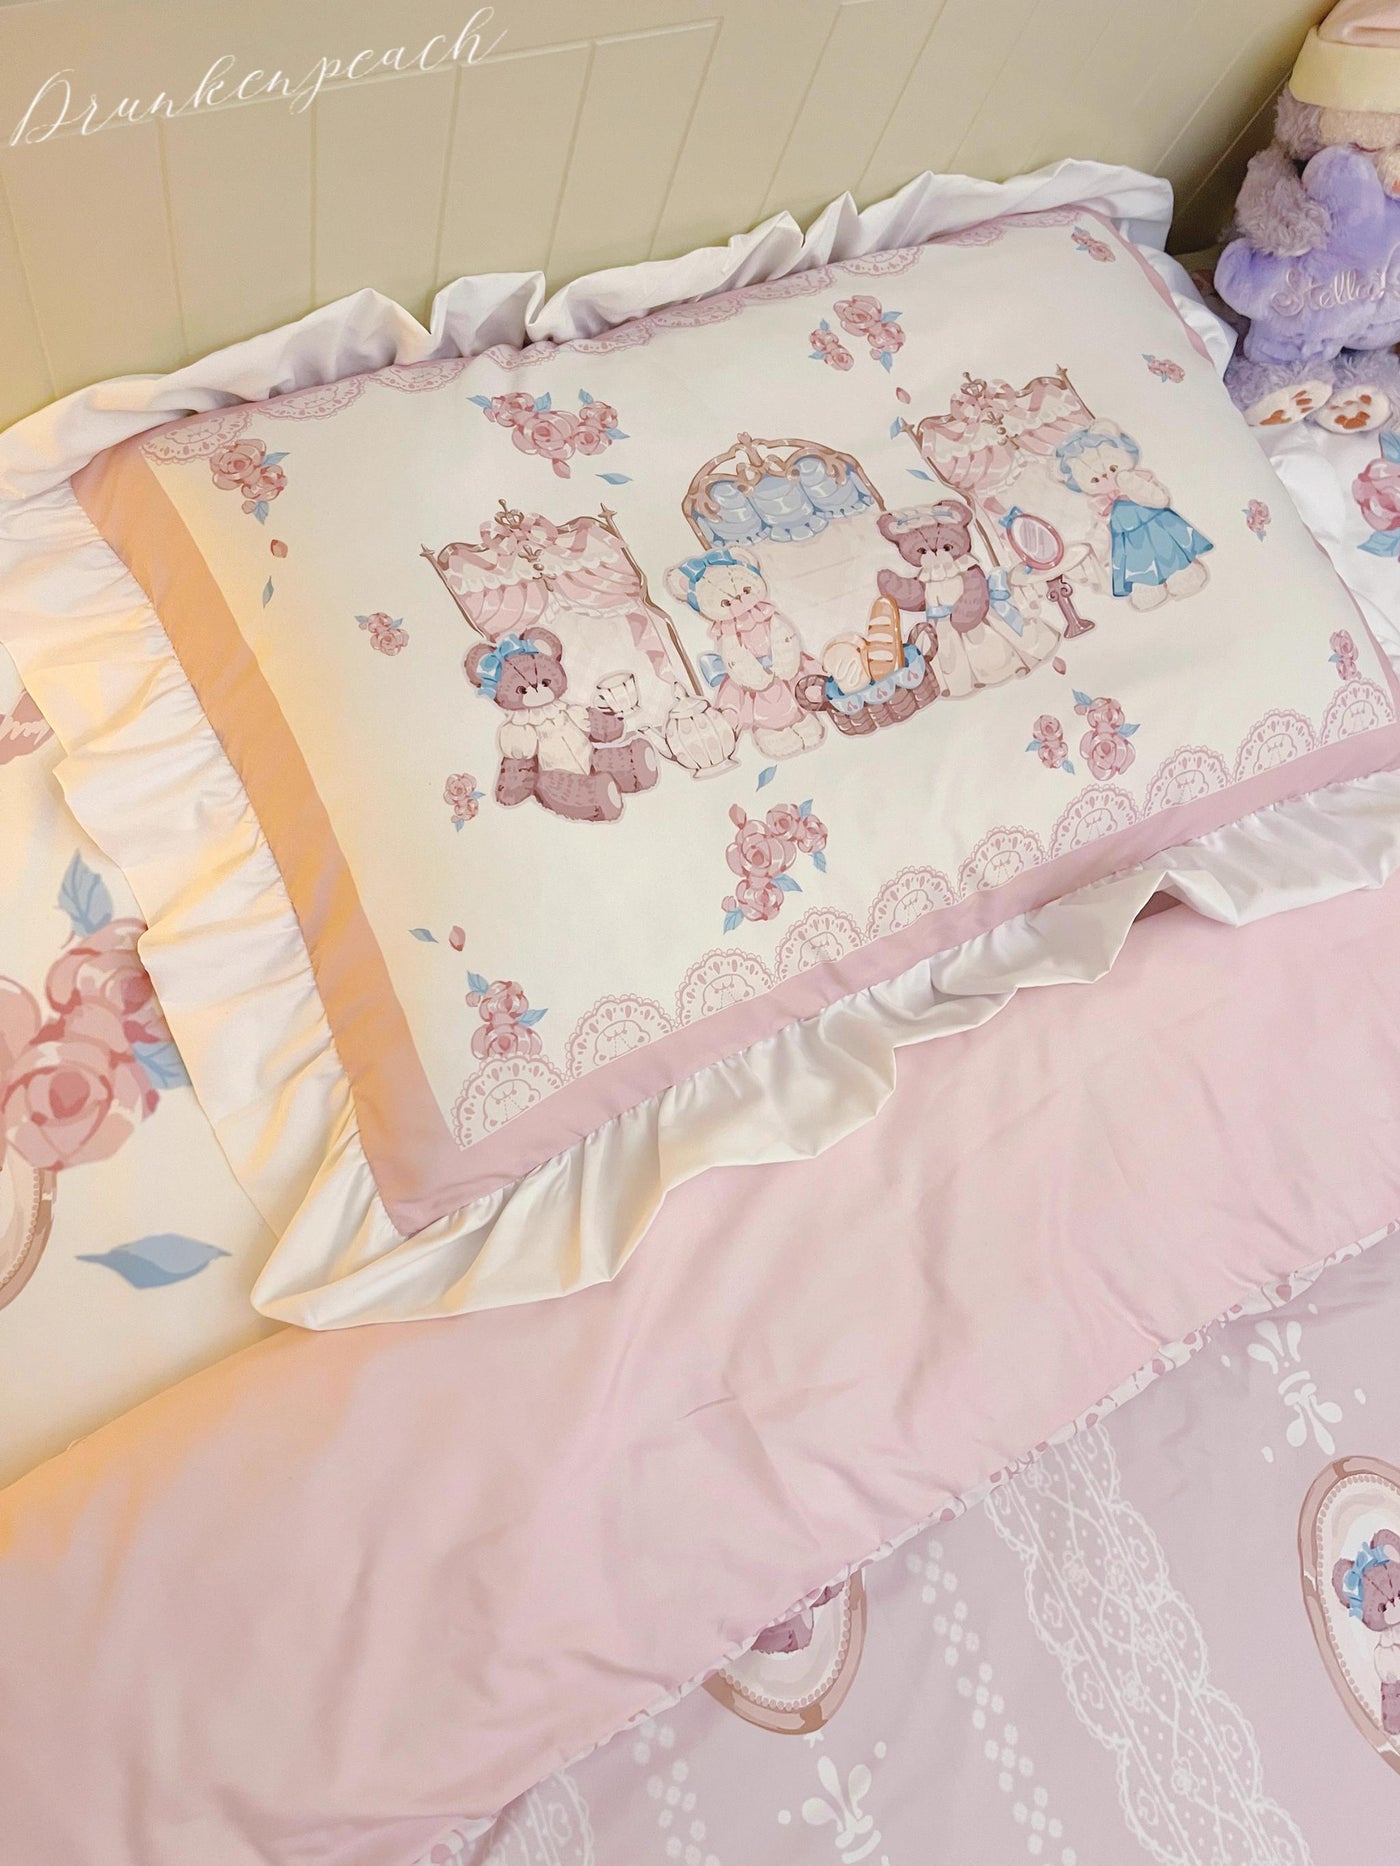 Cute Bear Print Bedding Set